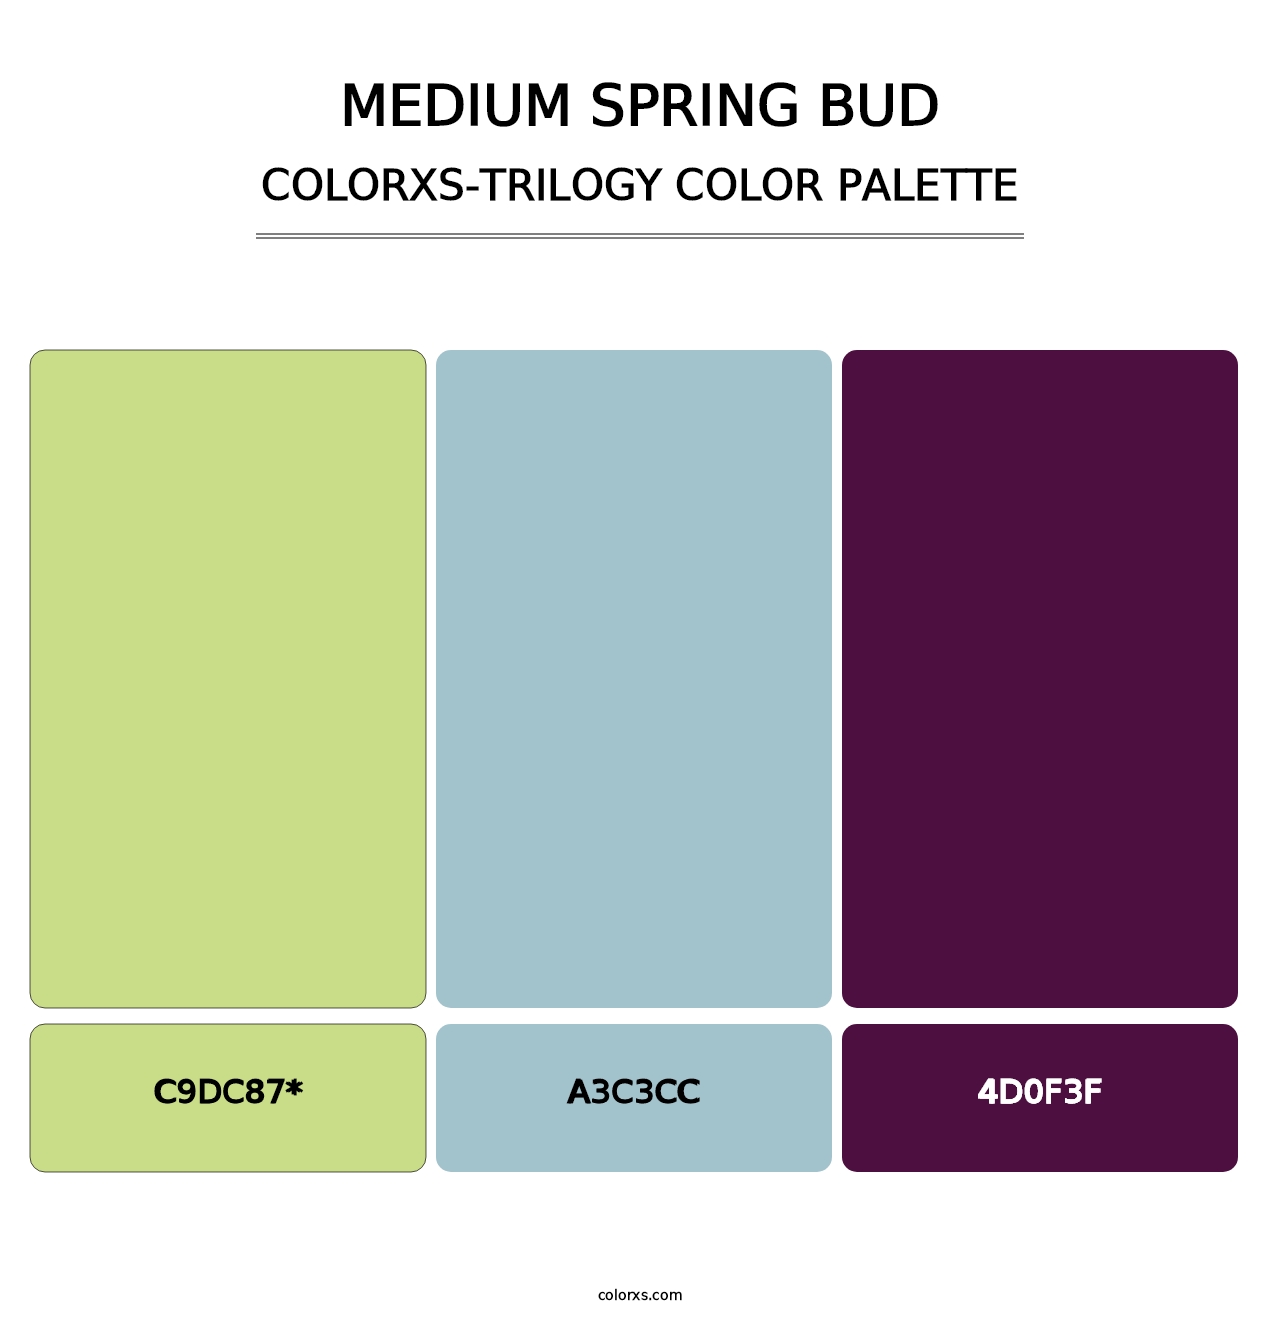 Medium Spring Bud - Colorxs Trilogy Palette